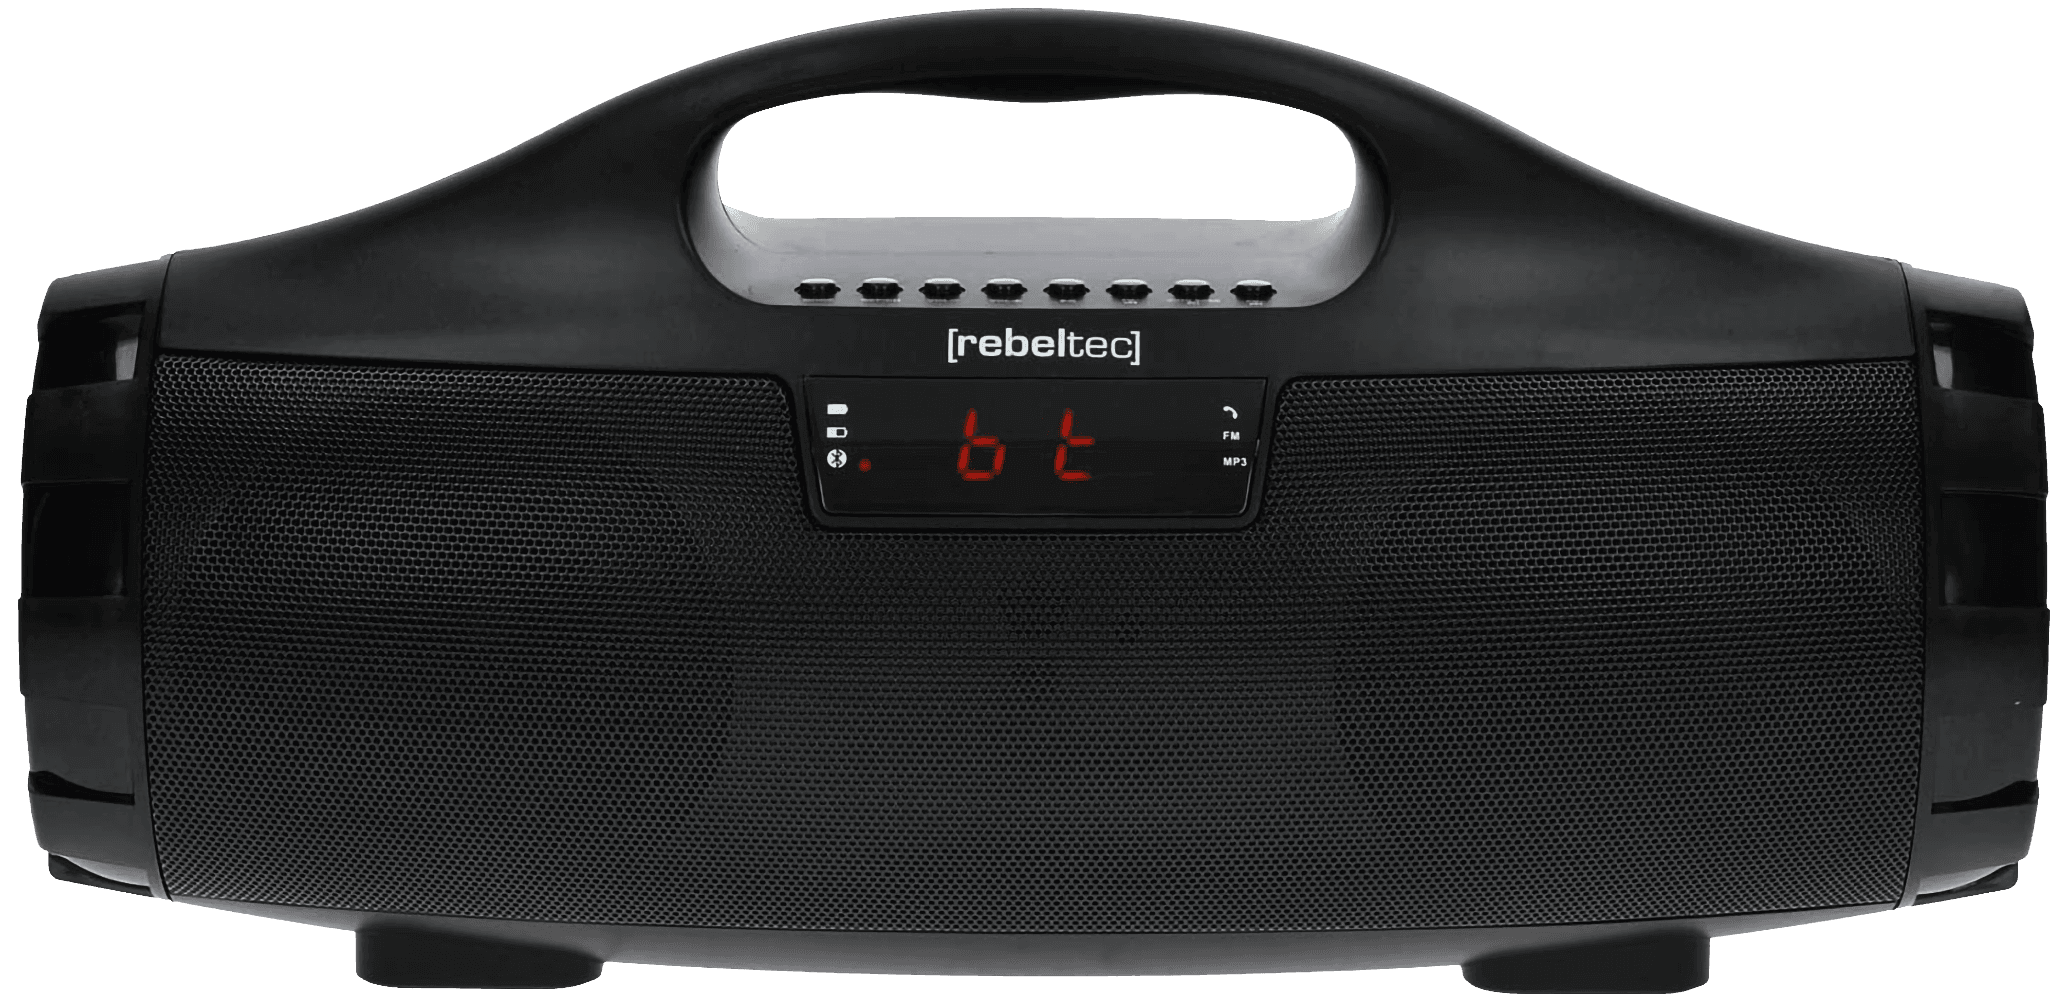 Motorola Moto E ( 2nd gen) kompatibilis bluetooth hangszóró Rebeltec Soundbox 390 fekete